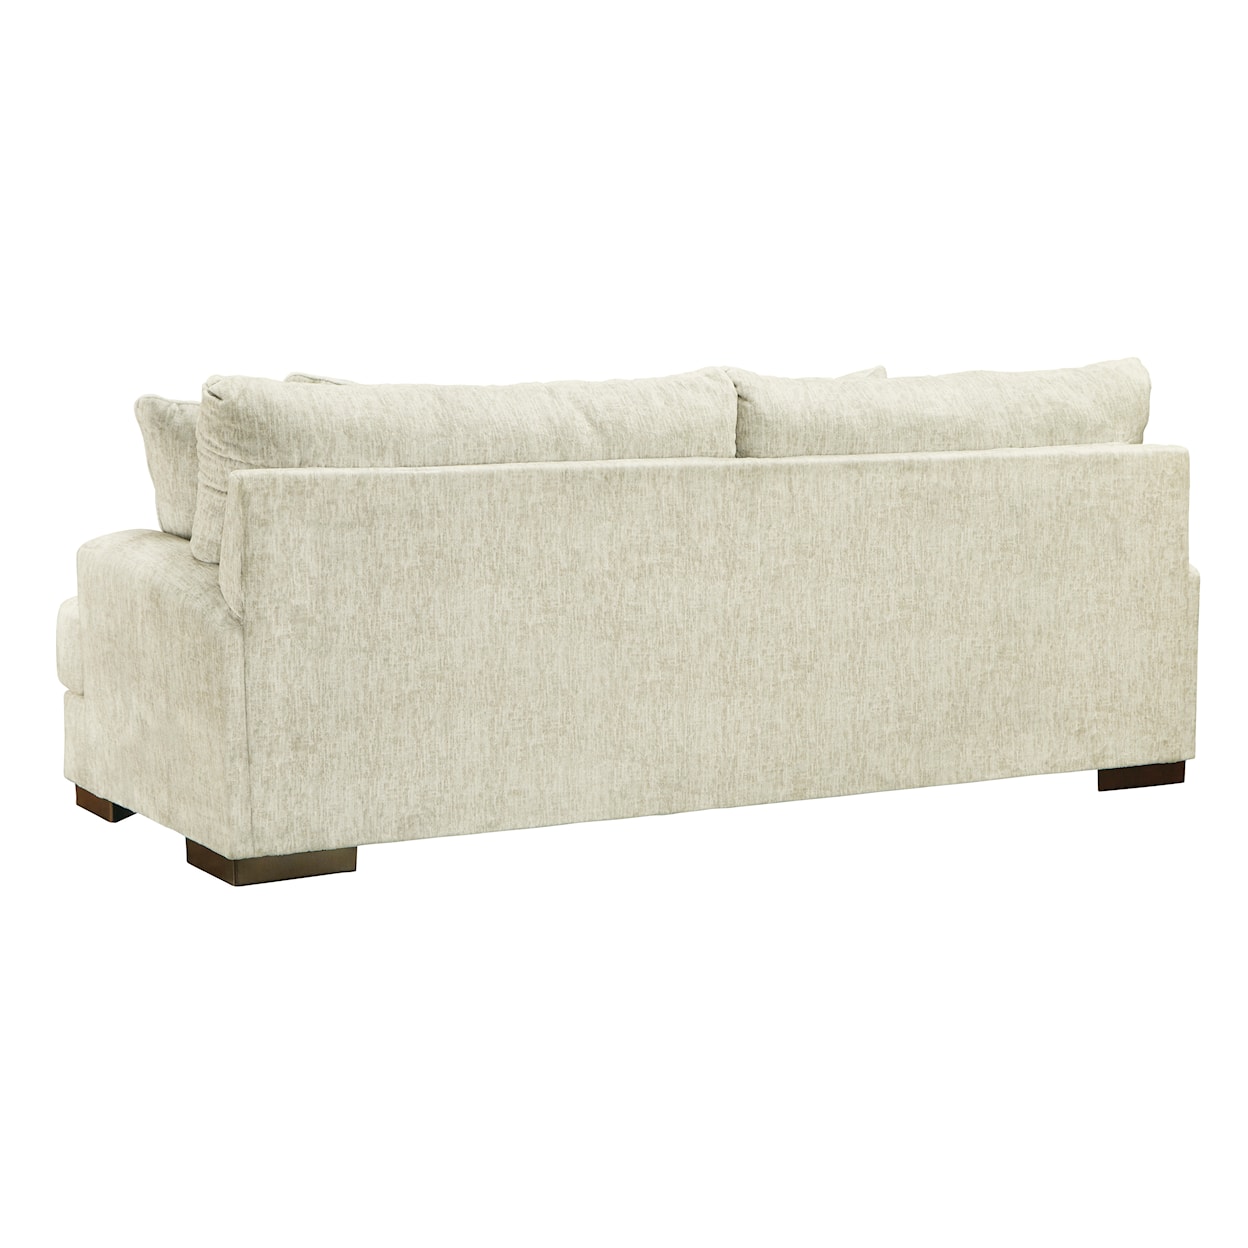 Ashley Furniture Signature Design Caretti Sofa